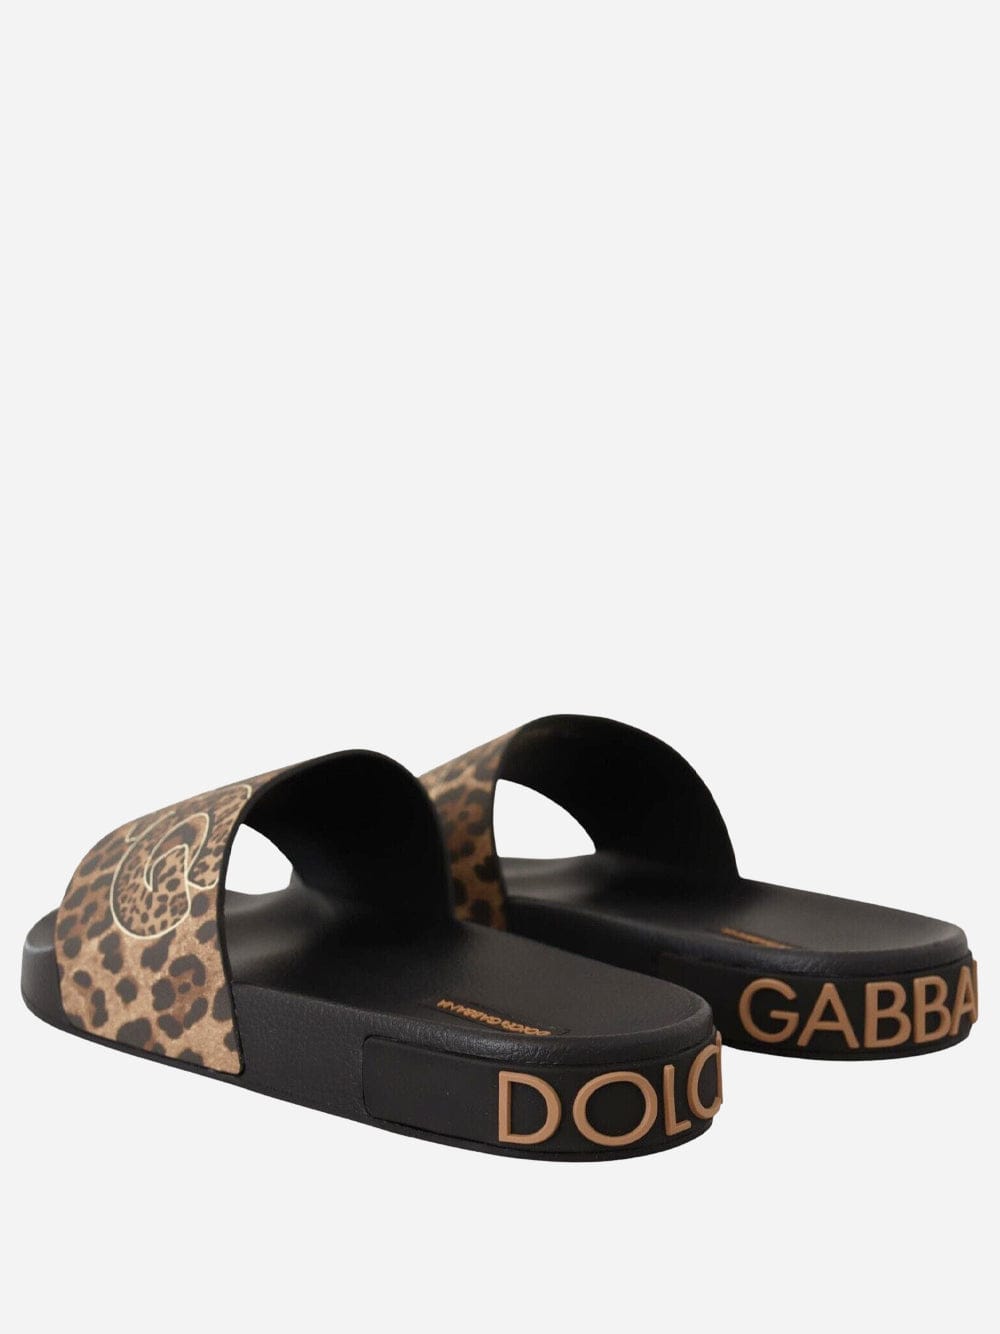 Dolce & Gabbana Leopard Print Logo Slides